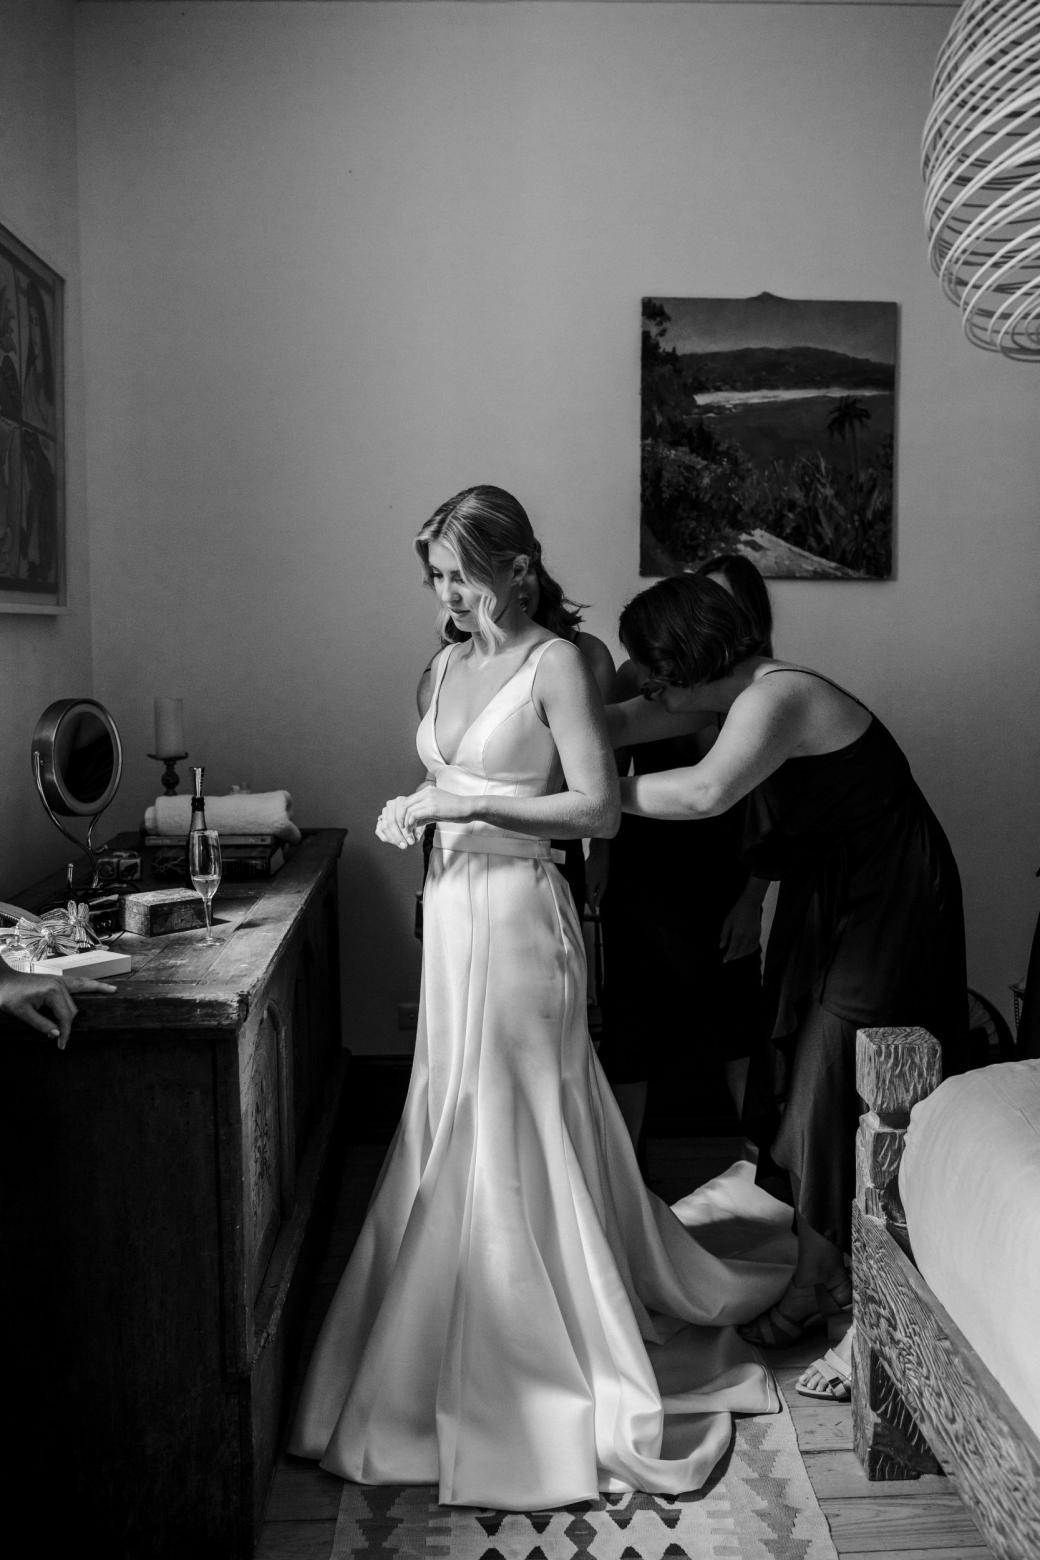 Real bride Isobel wore the Bespoke Taryn/Prea wedding dress by Karen Willis Holmes.